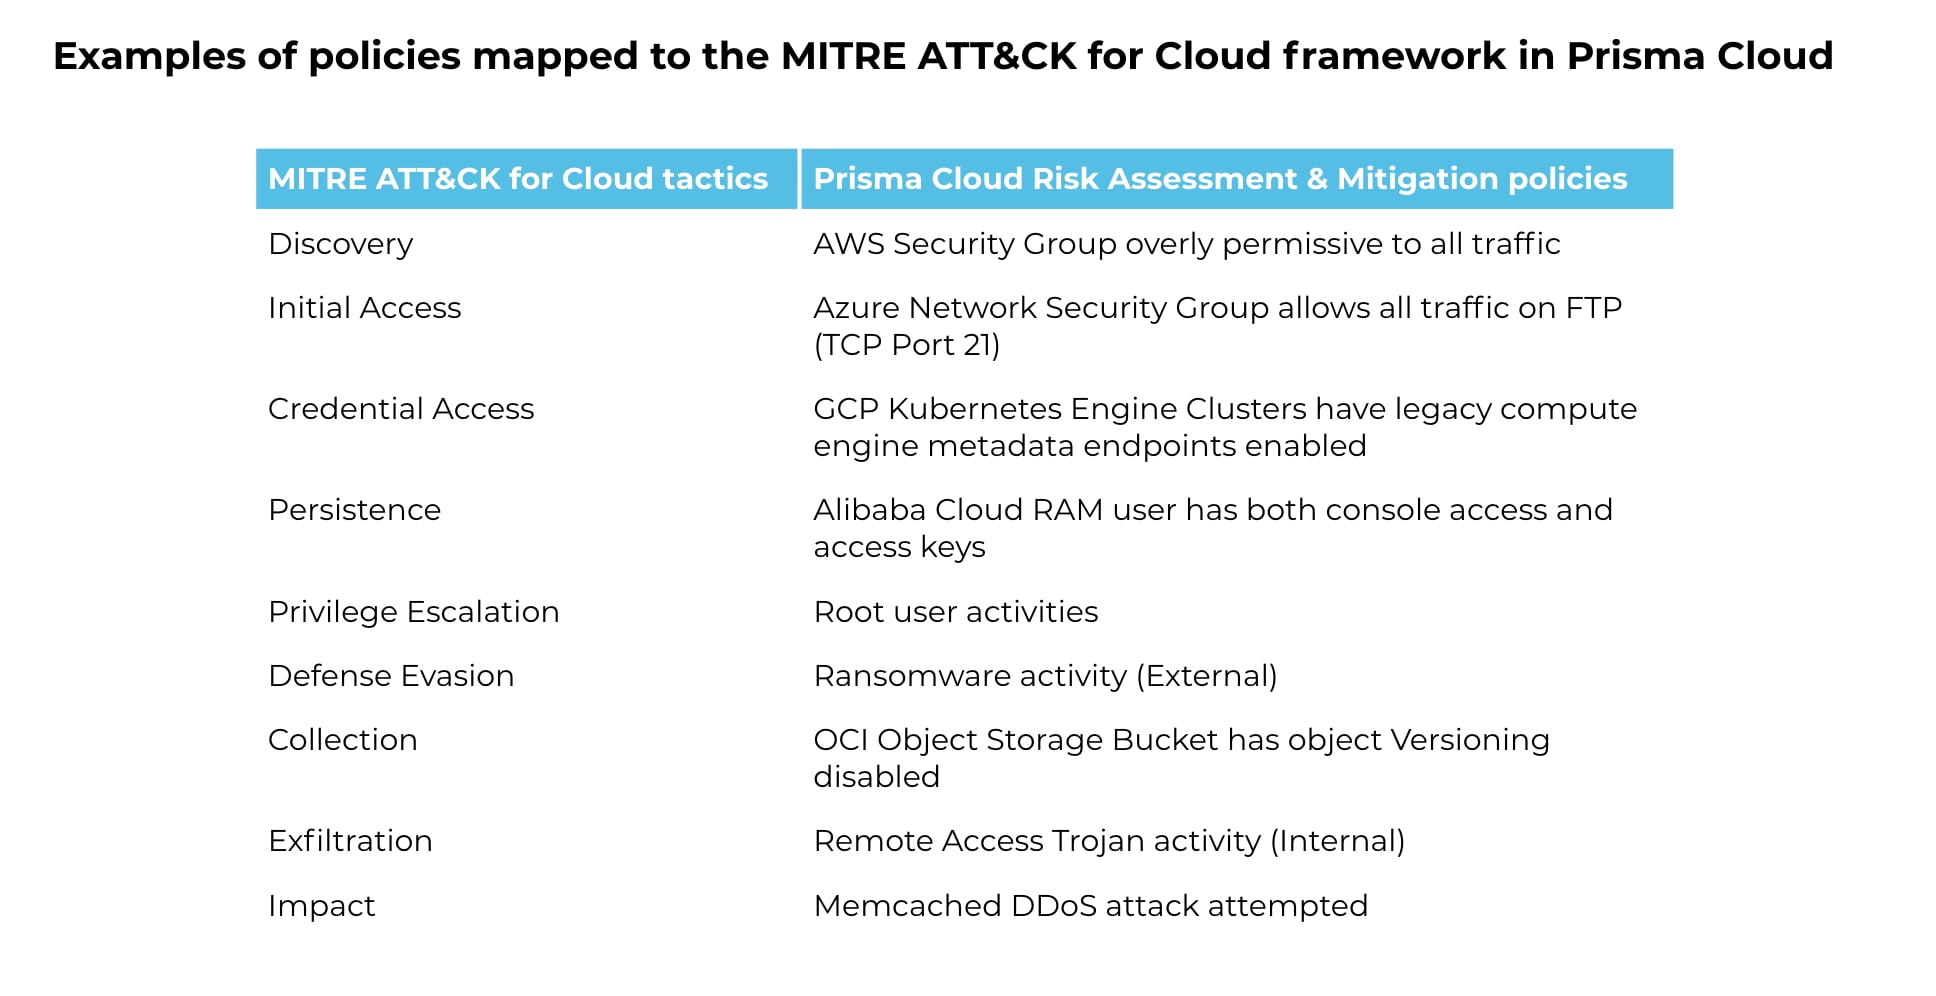 ATT&CK for Cloud tactics with corresponding policies in Prisma Cloud